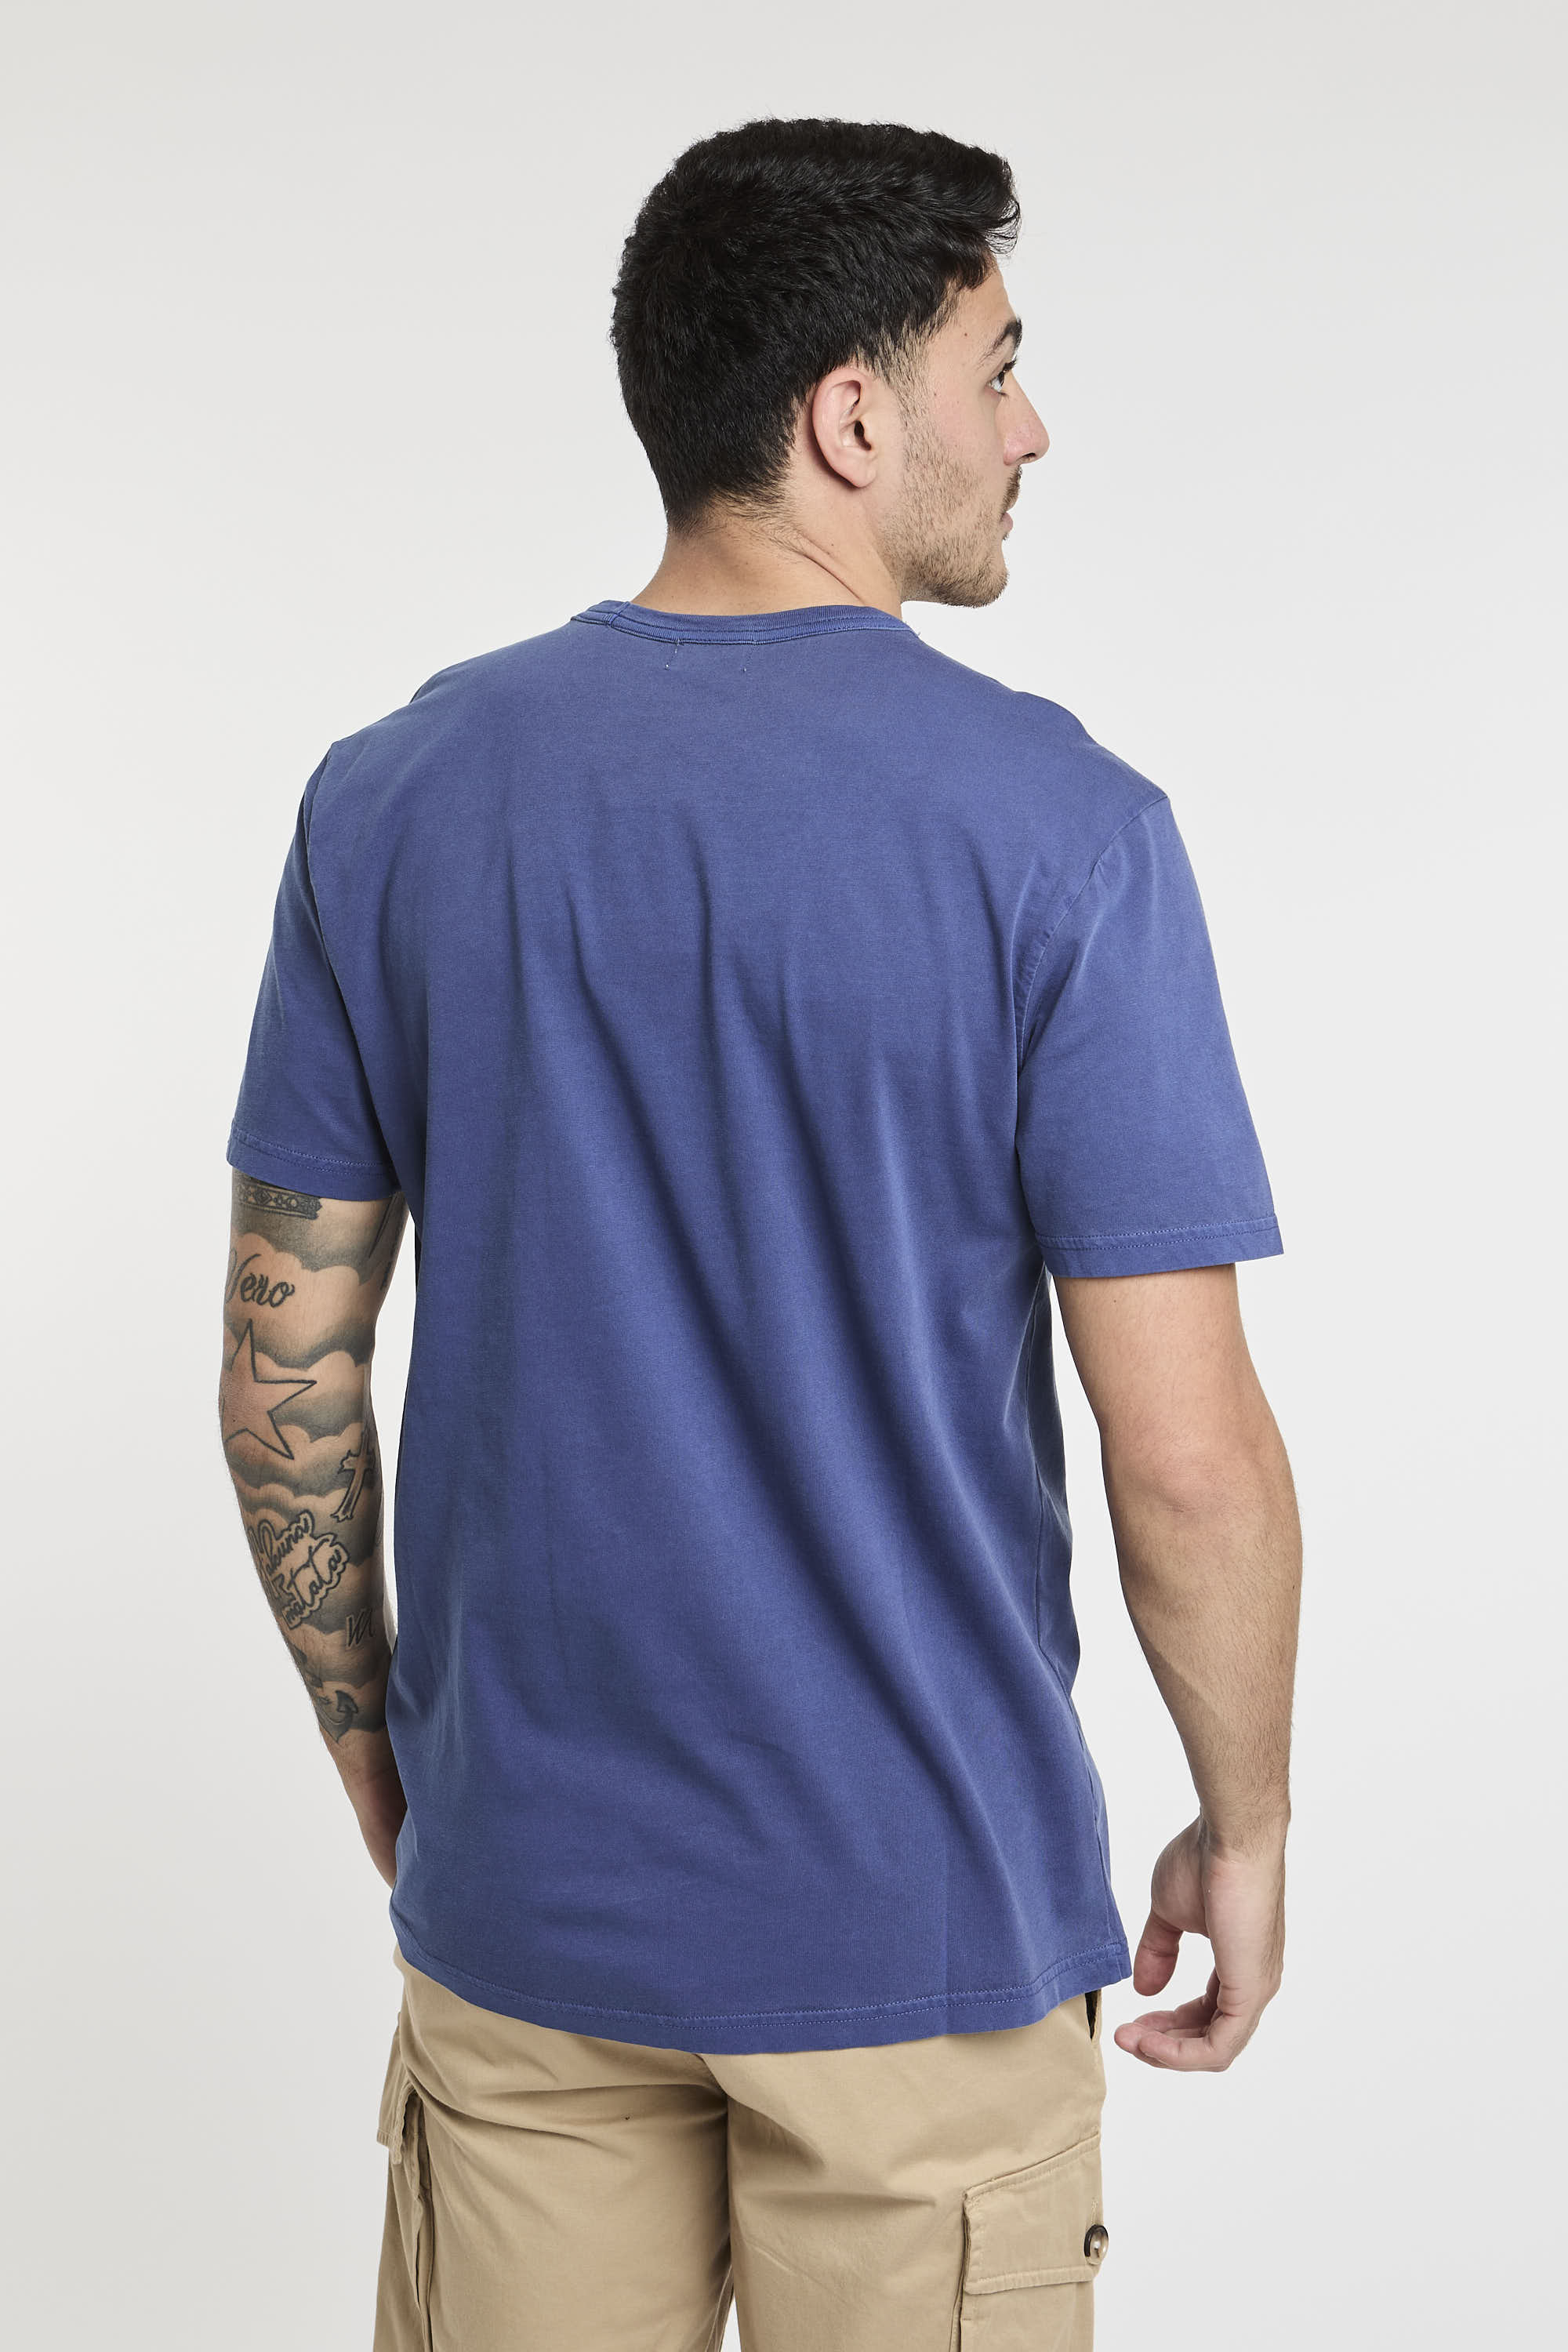 Woolrich Garment-Dyed Pure Cotton Blue T-Shirt-5